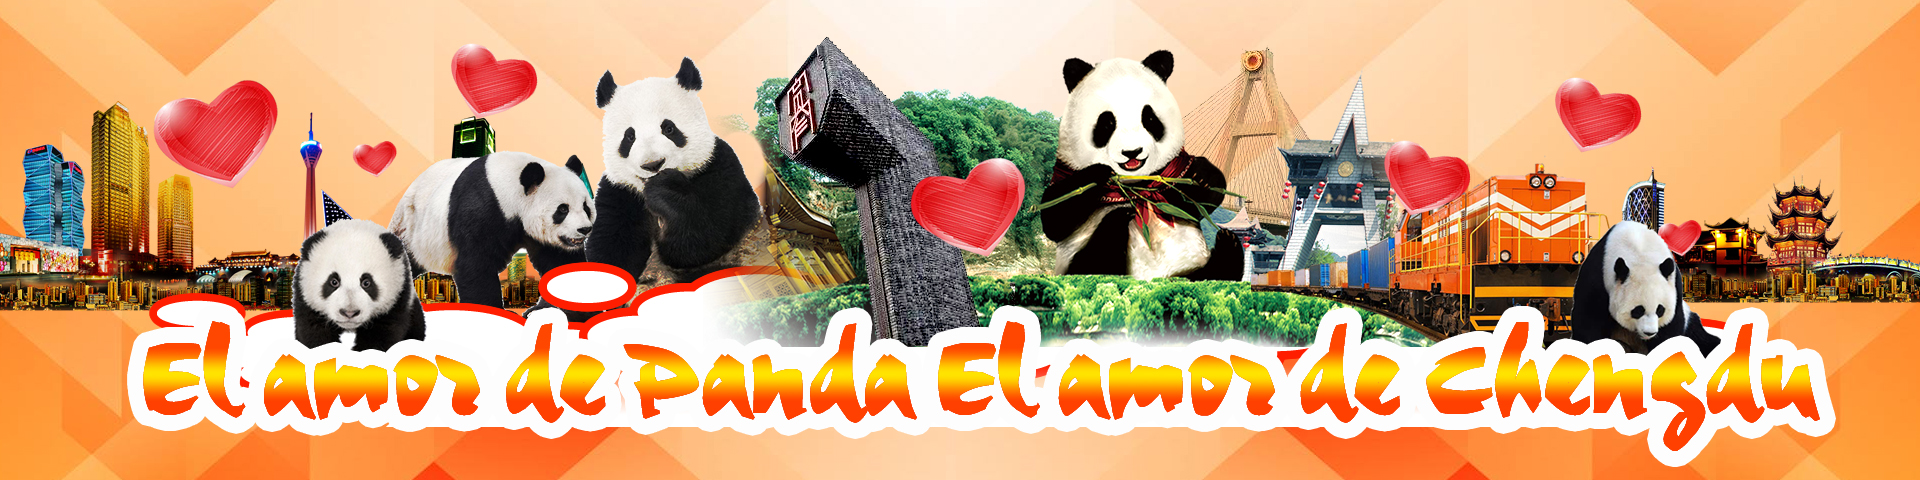 Love Chengdu Love Panda-Spanish_fororder_头图banner